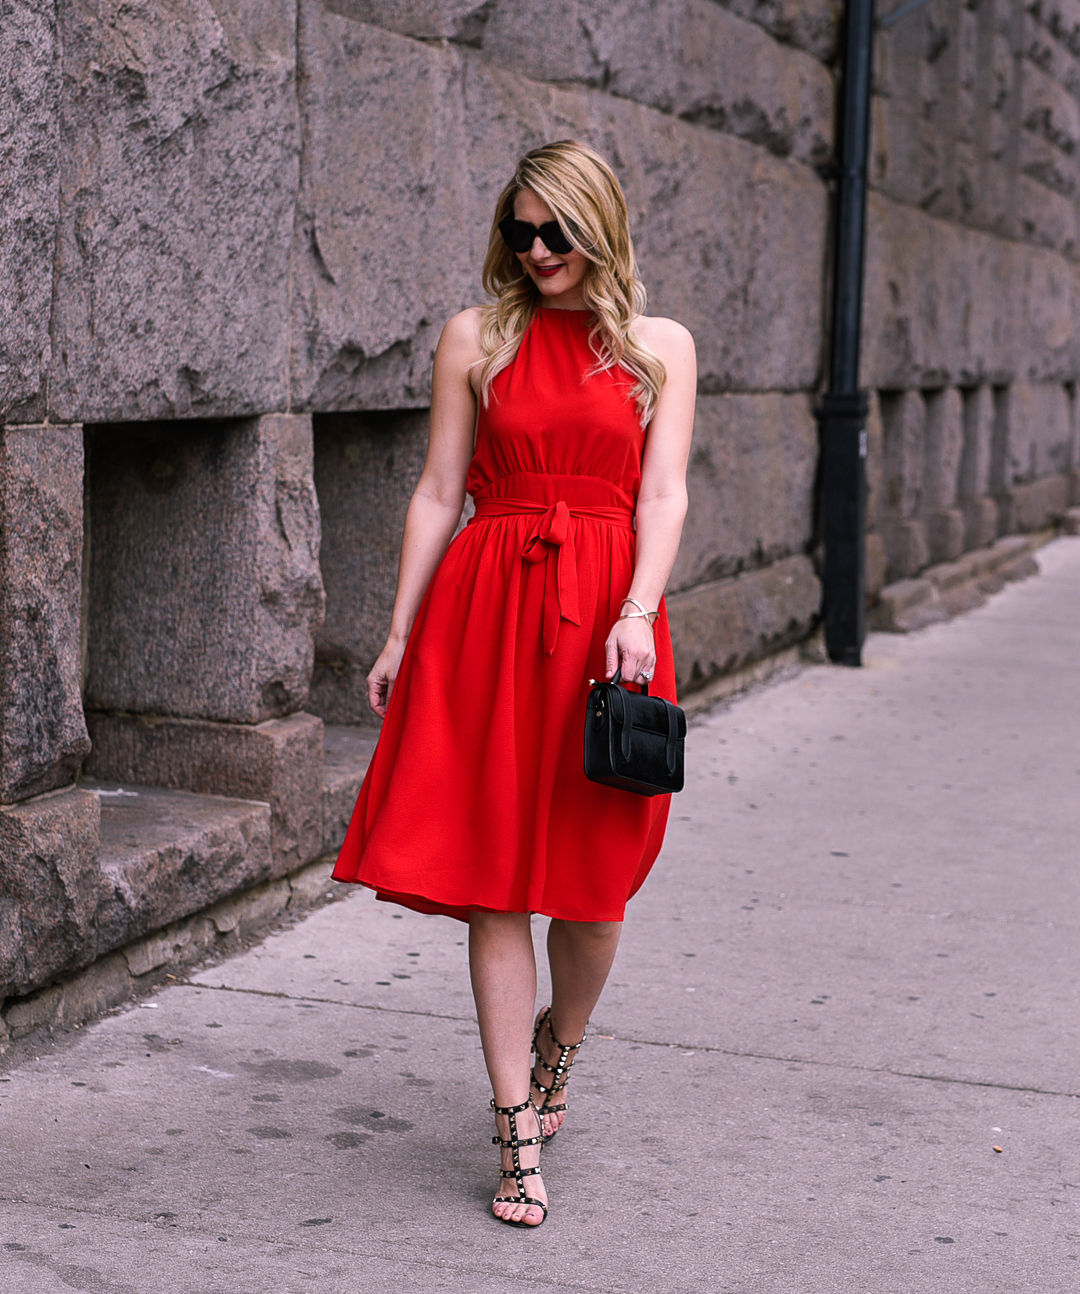 A flattering red dress. 